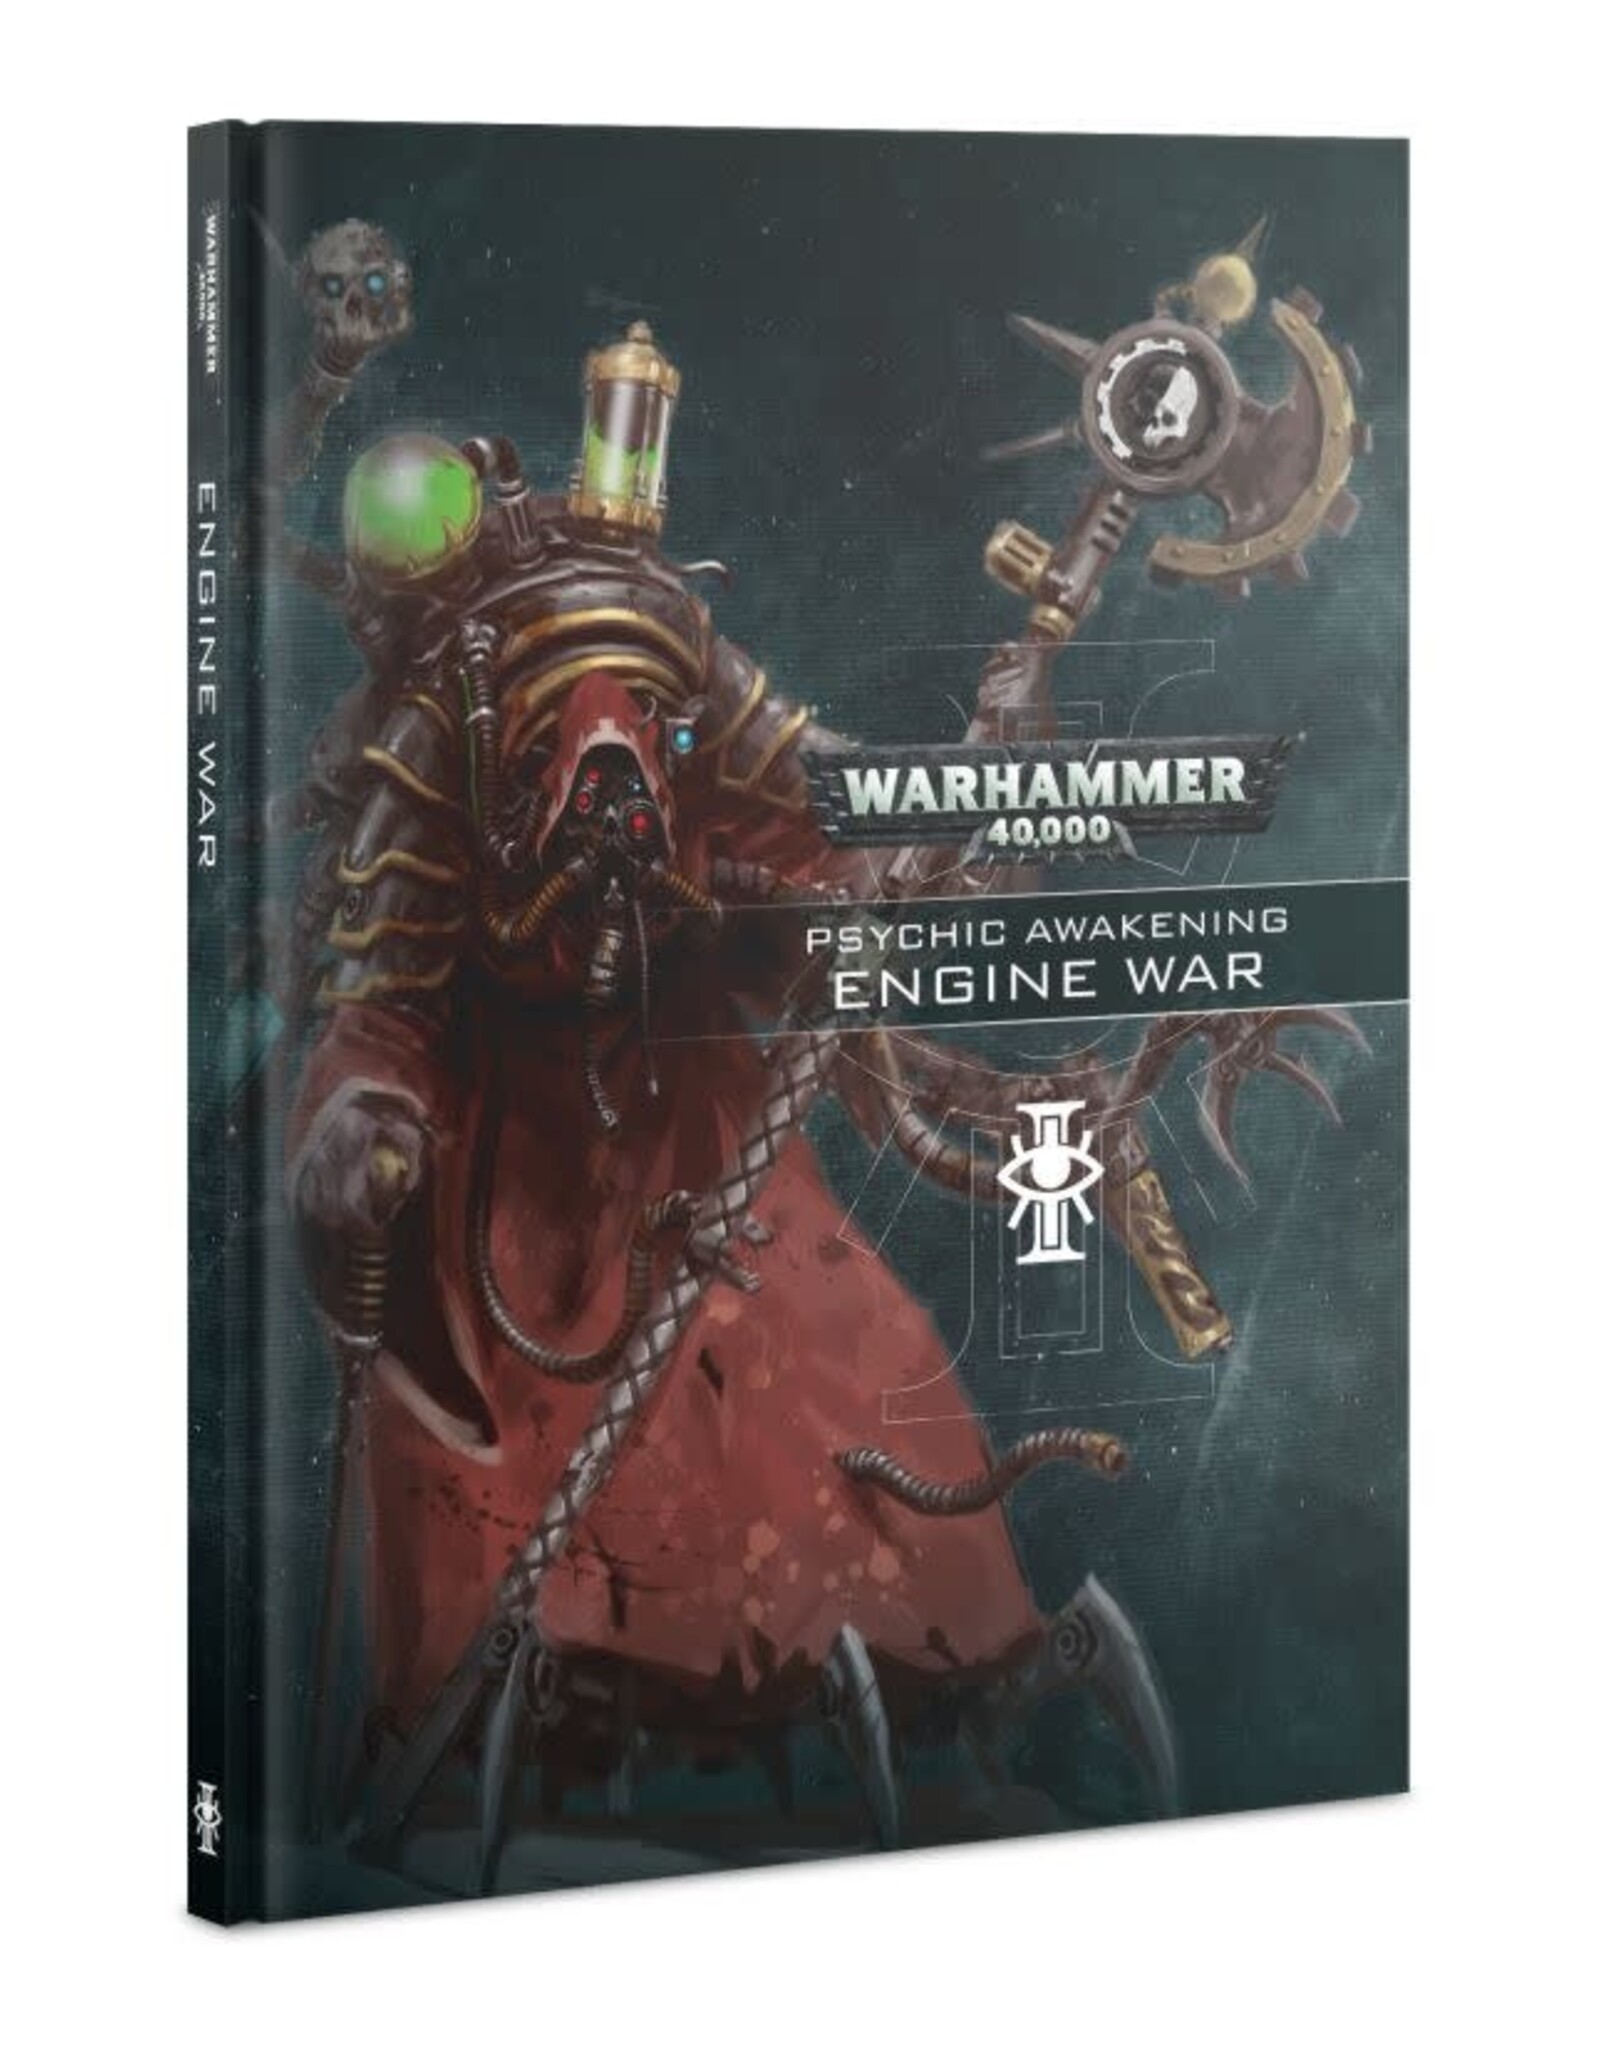 Warhammer 40k Engine War - Psychic Awakening Book 7